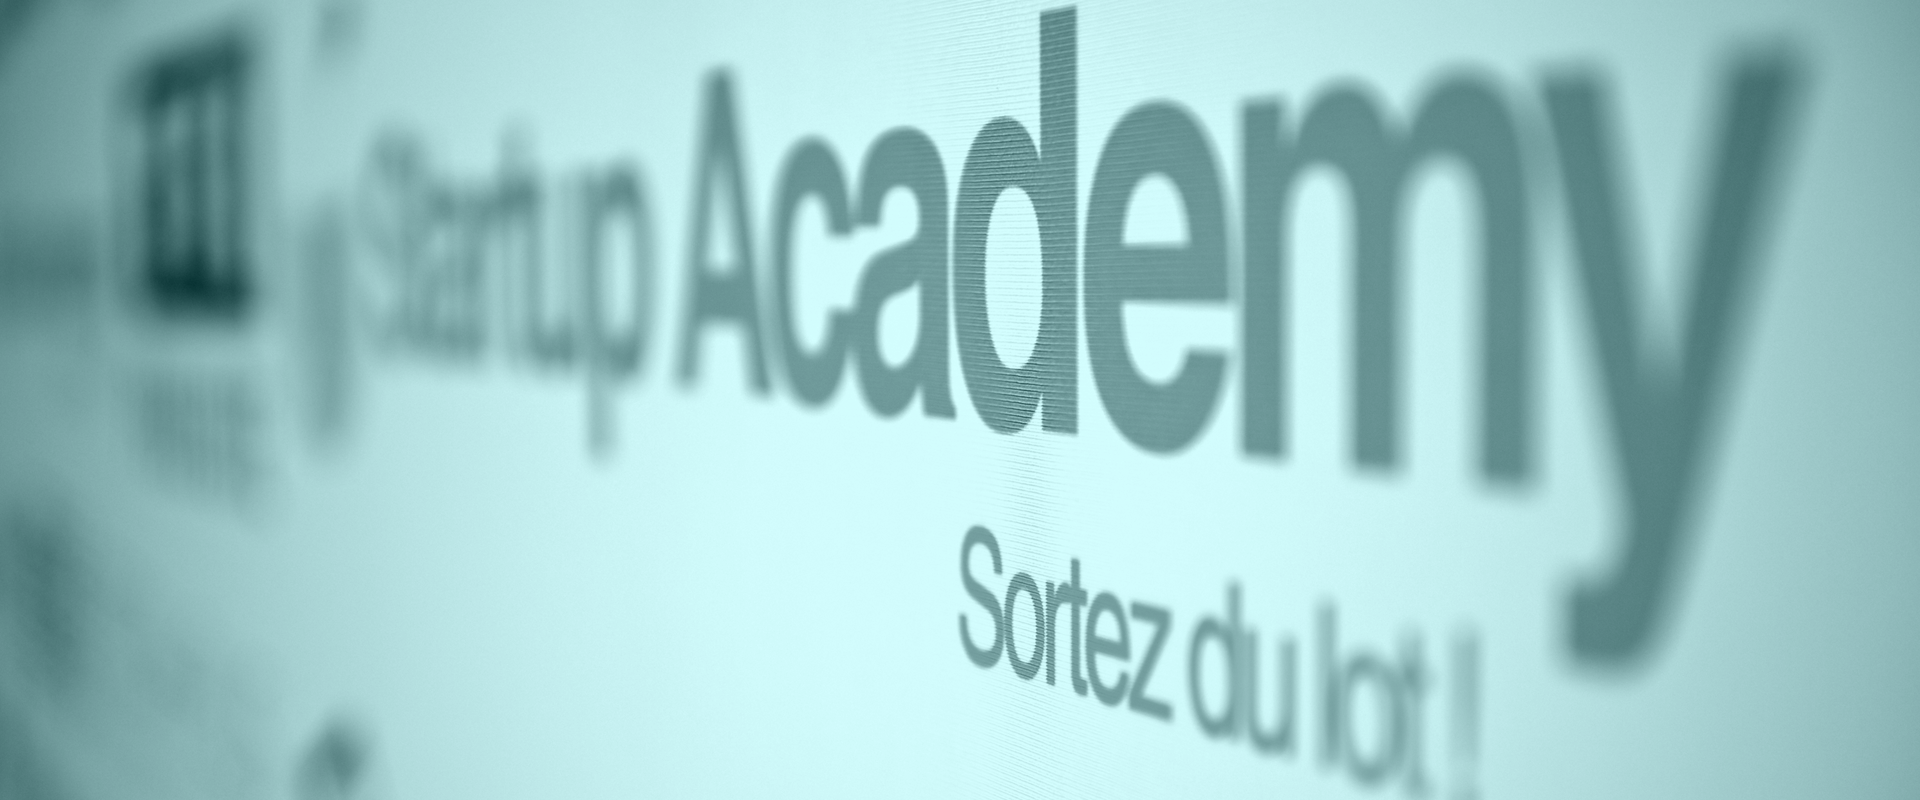 Startup Academy